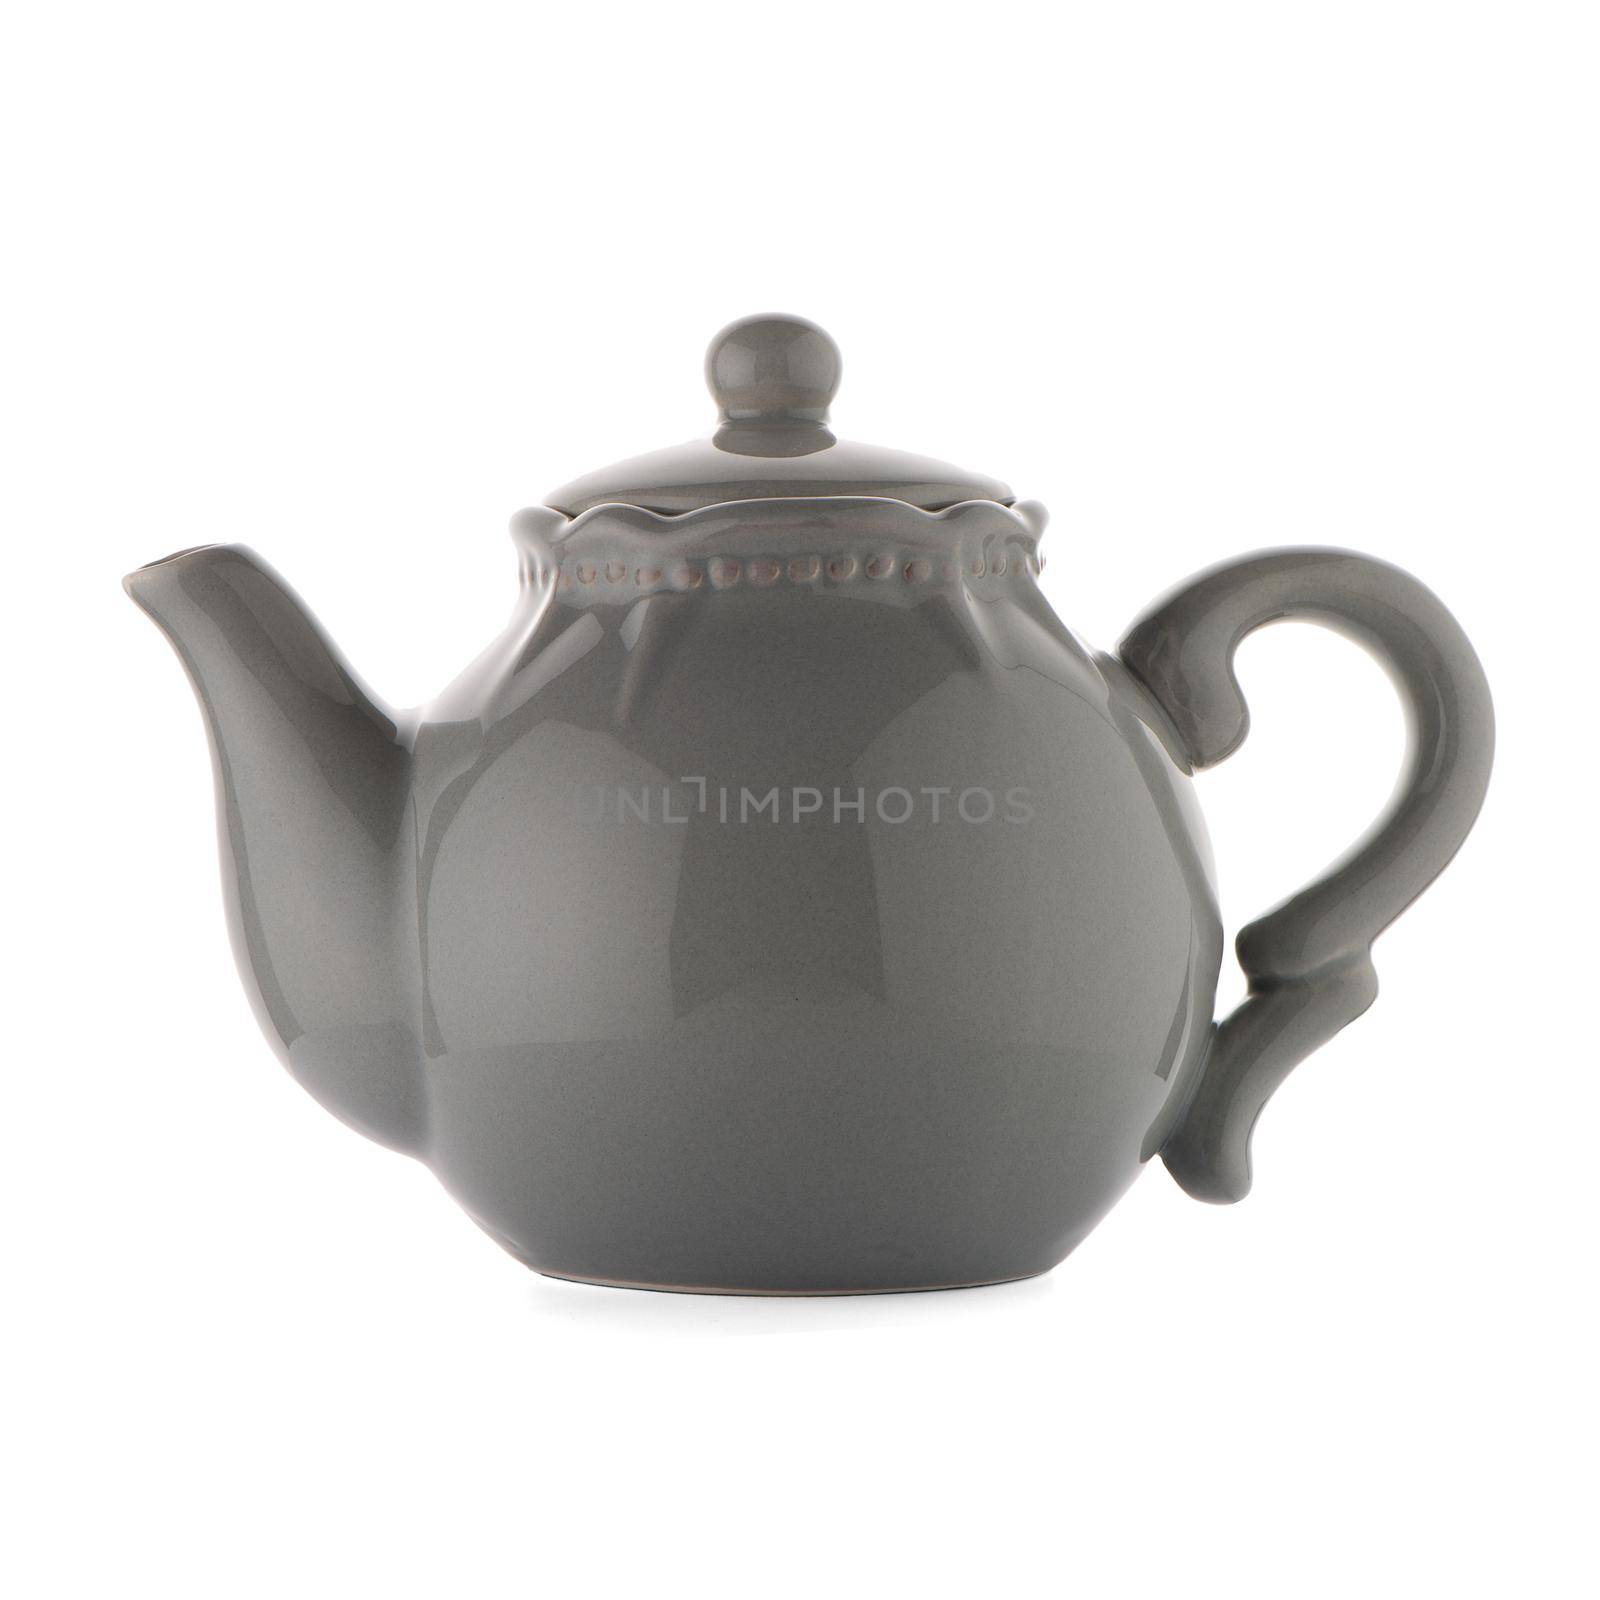 Grey teapot isolated on white background.